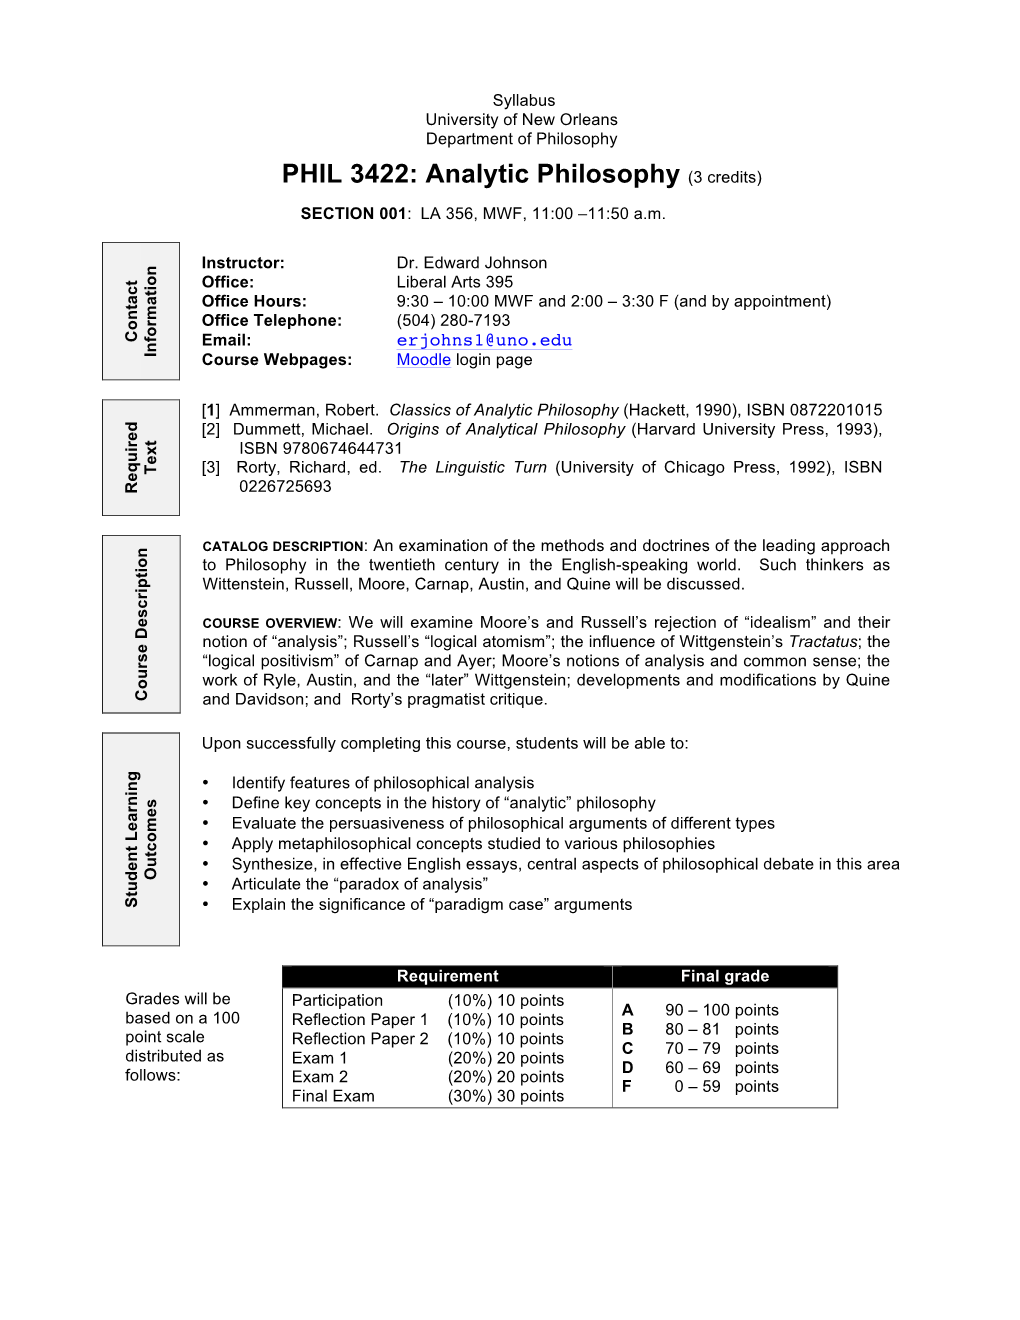 PHIL 3422: Analytic Philosophy (3 Credits)